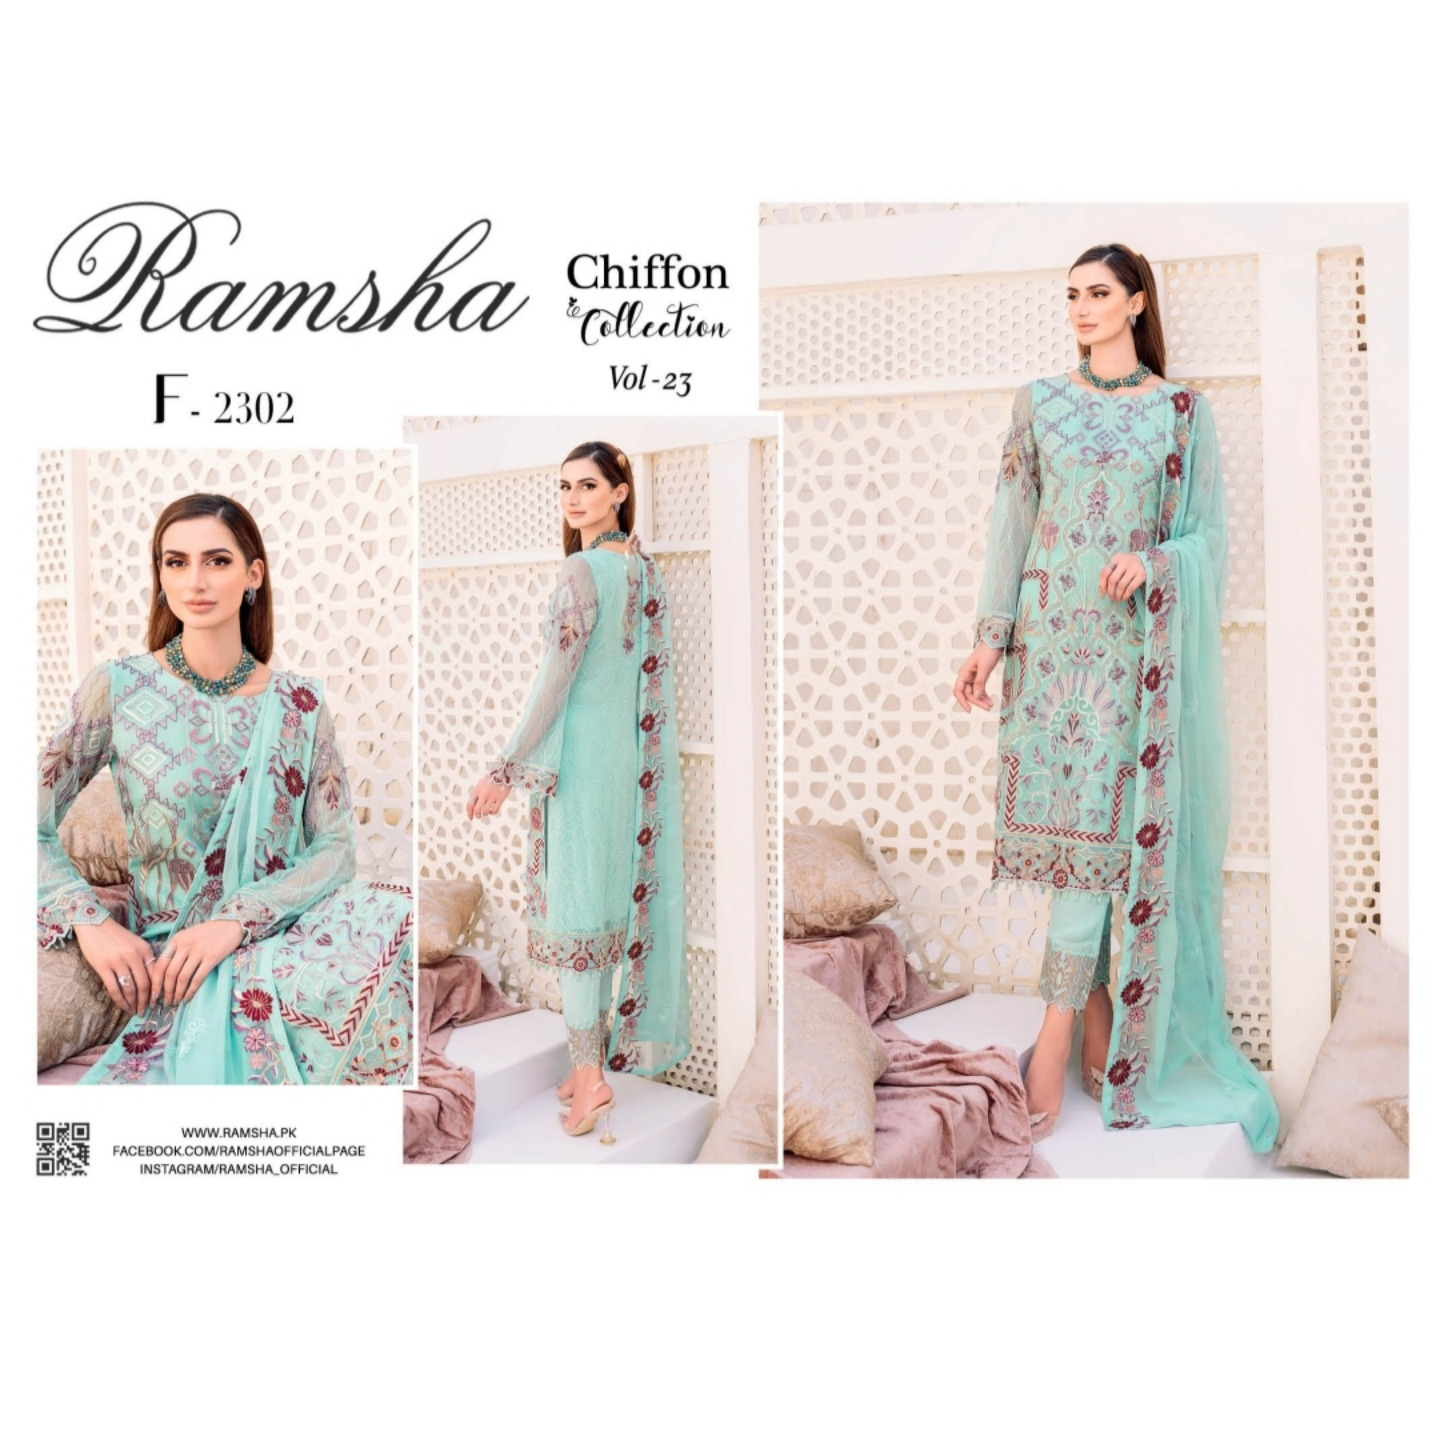 RAMSHA chiffon collection vol-23